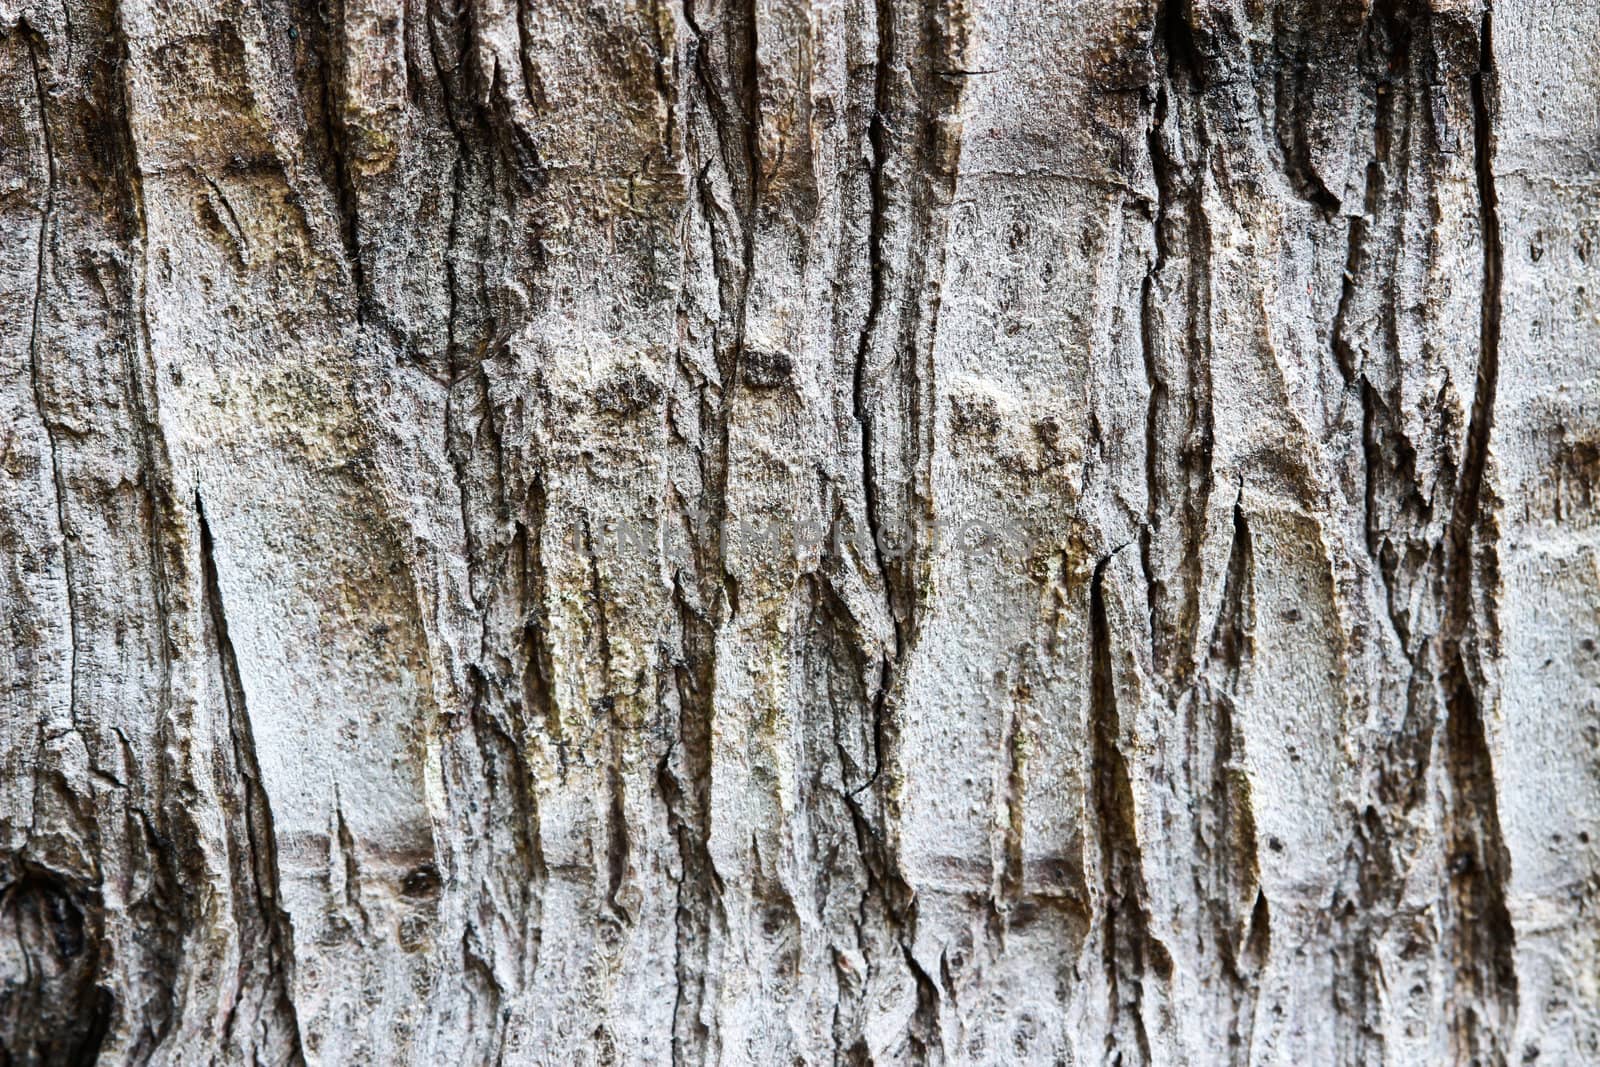 closes - up bark by bajita111122